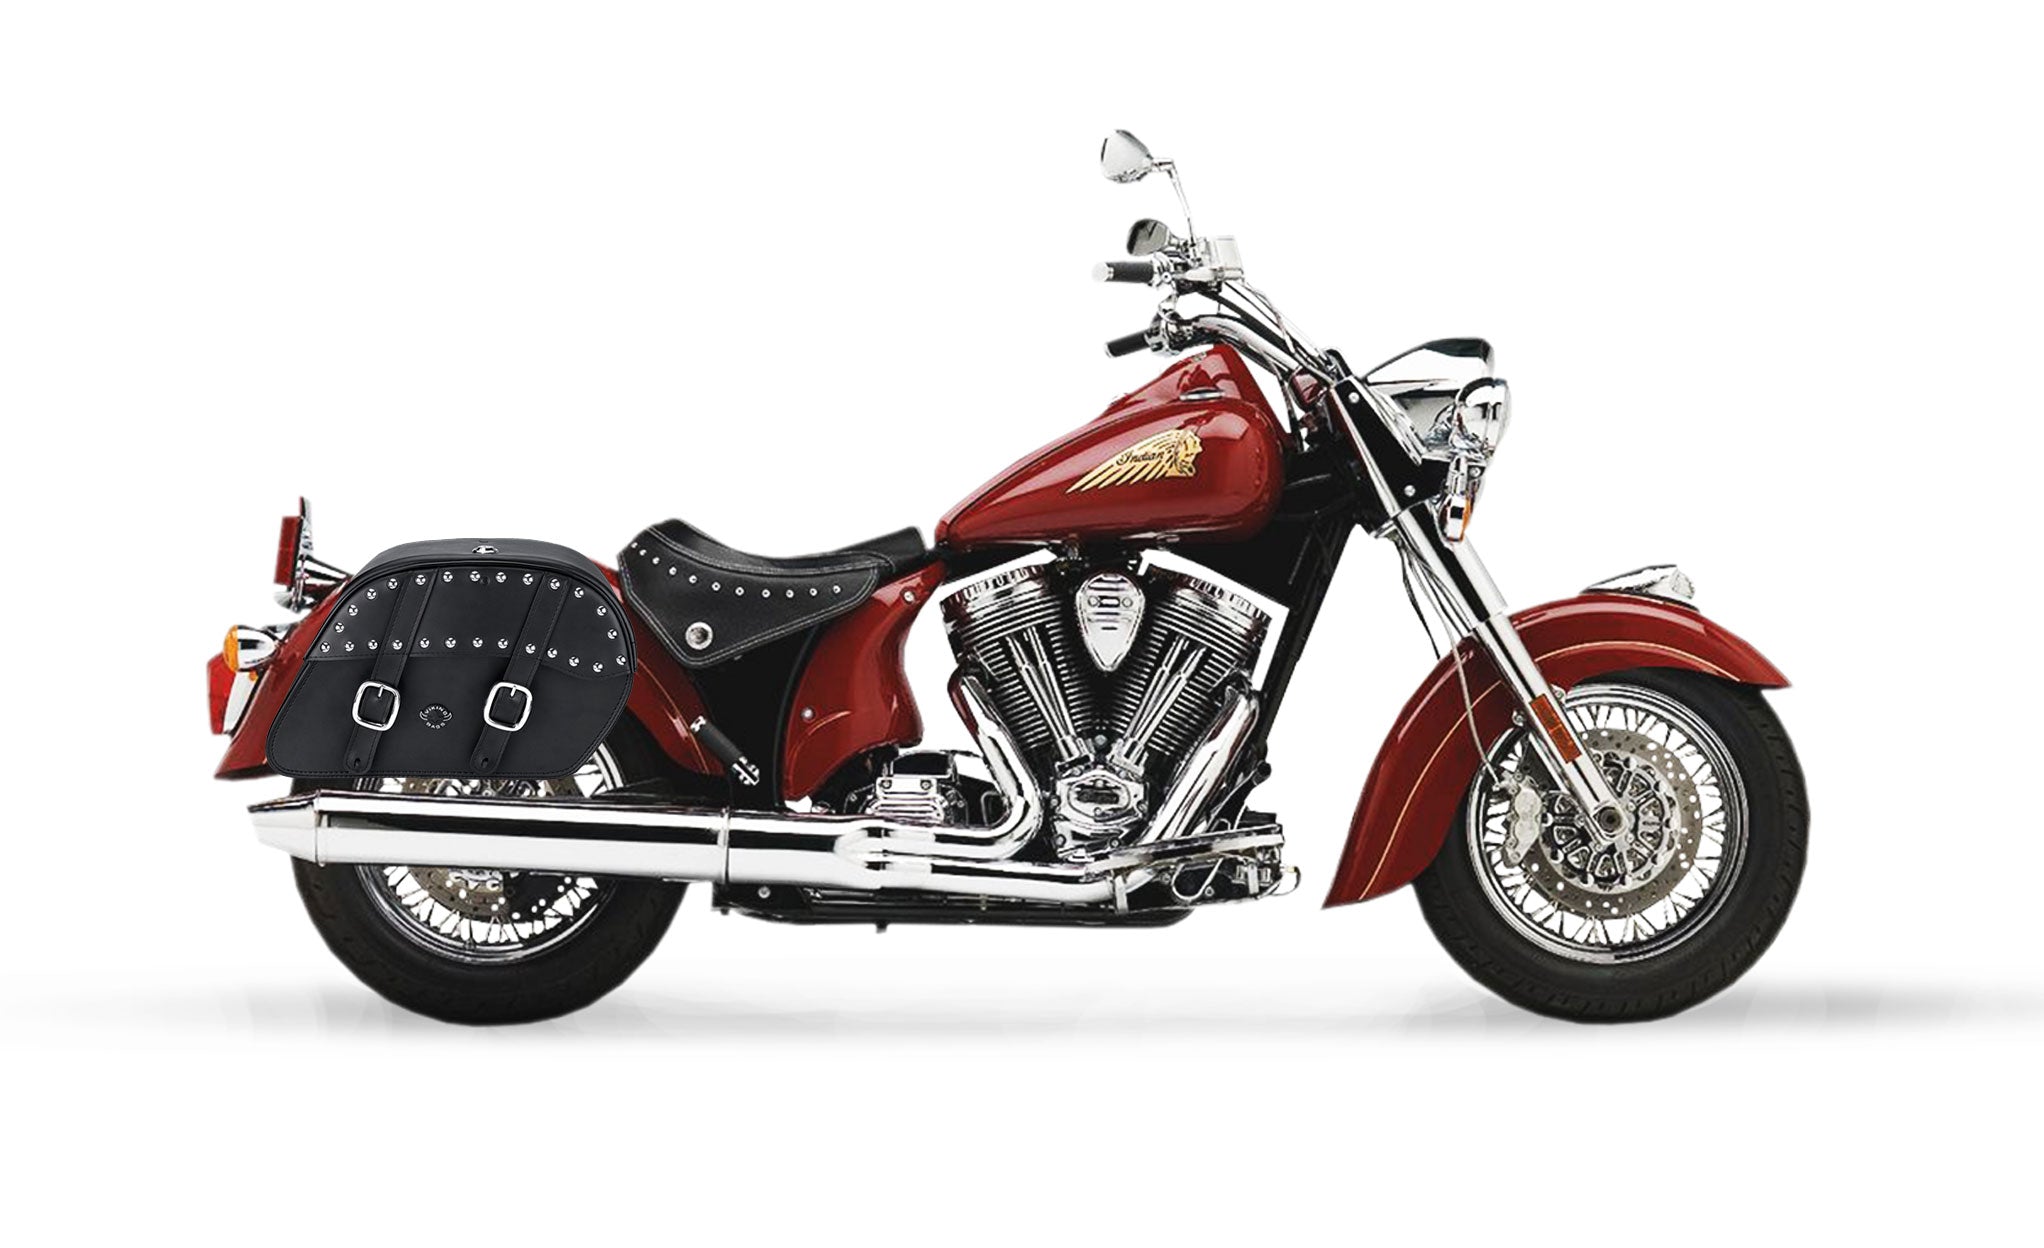 Viking Skarner Large Indian Chief Standard Leather Studded Motorcycle Saddlebags on Bike Photo @expand